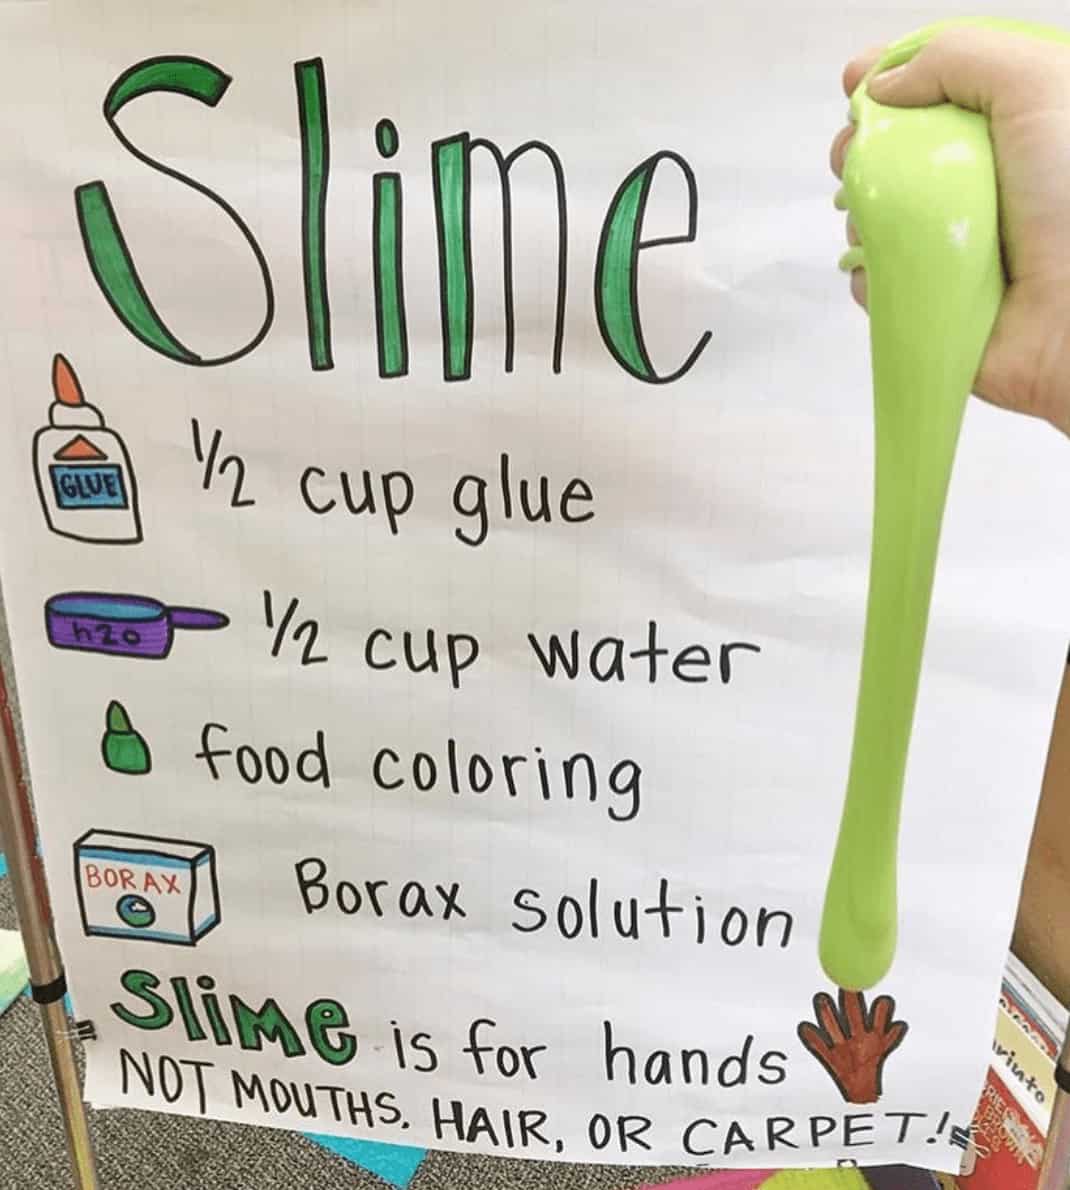 Easy Slime Recipe with Borax (the original slime recipe!)